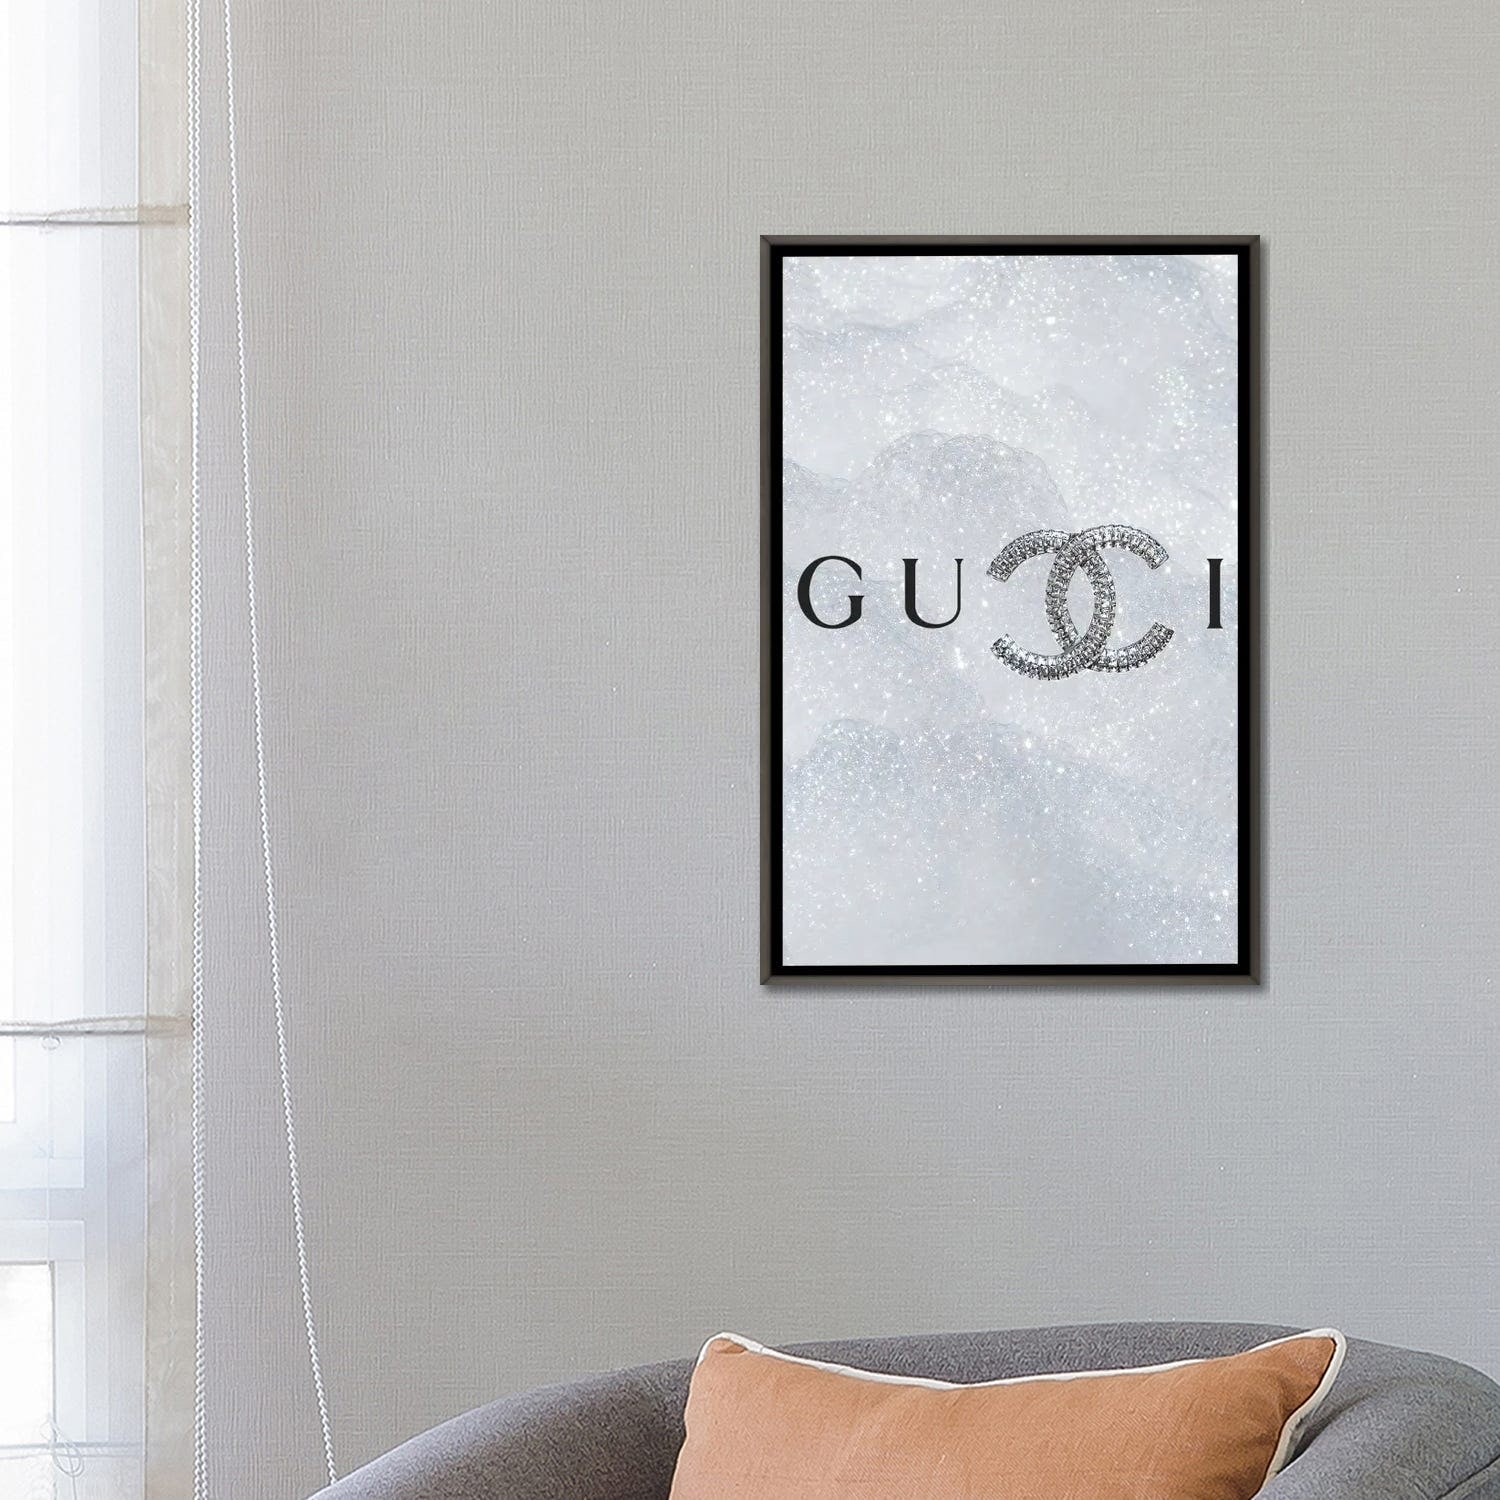 Framed Canvas Art (White Floating Frame) - LV Flower Logo Black by TJ ( Fashion > Fashion Brands > Louis Vuitton art) - 26x18 in